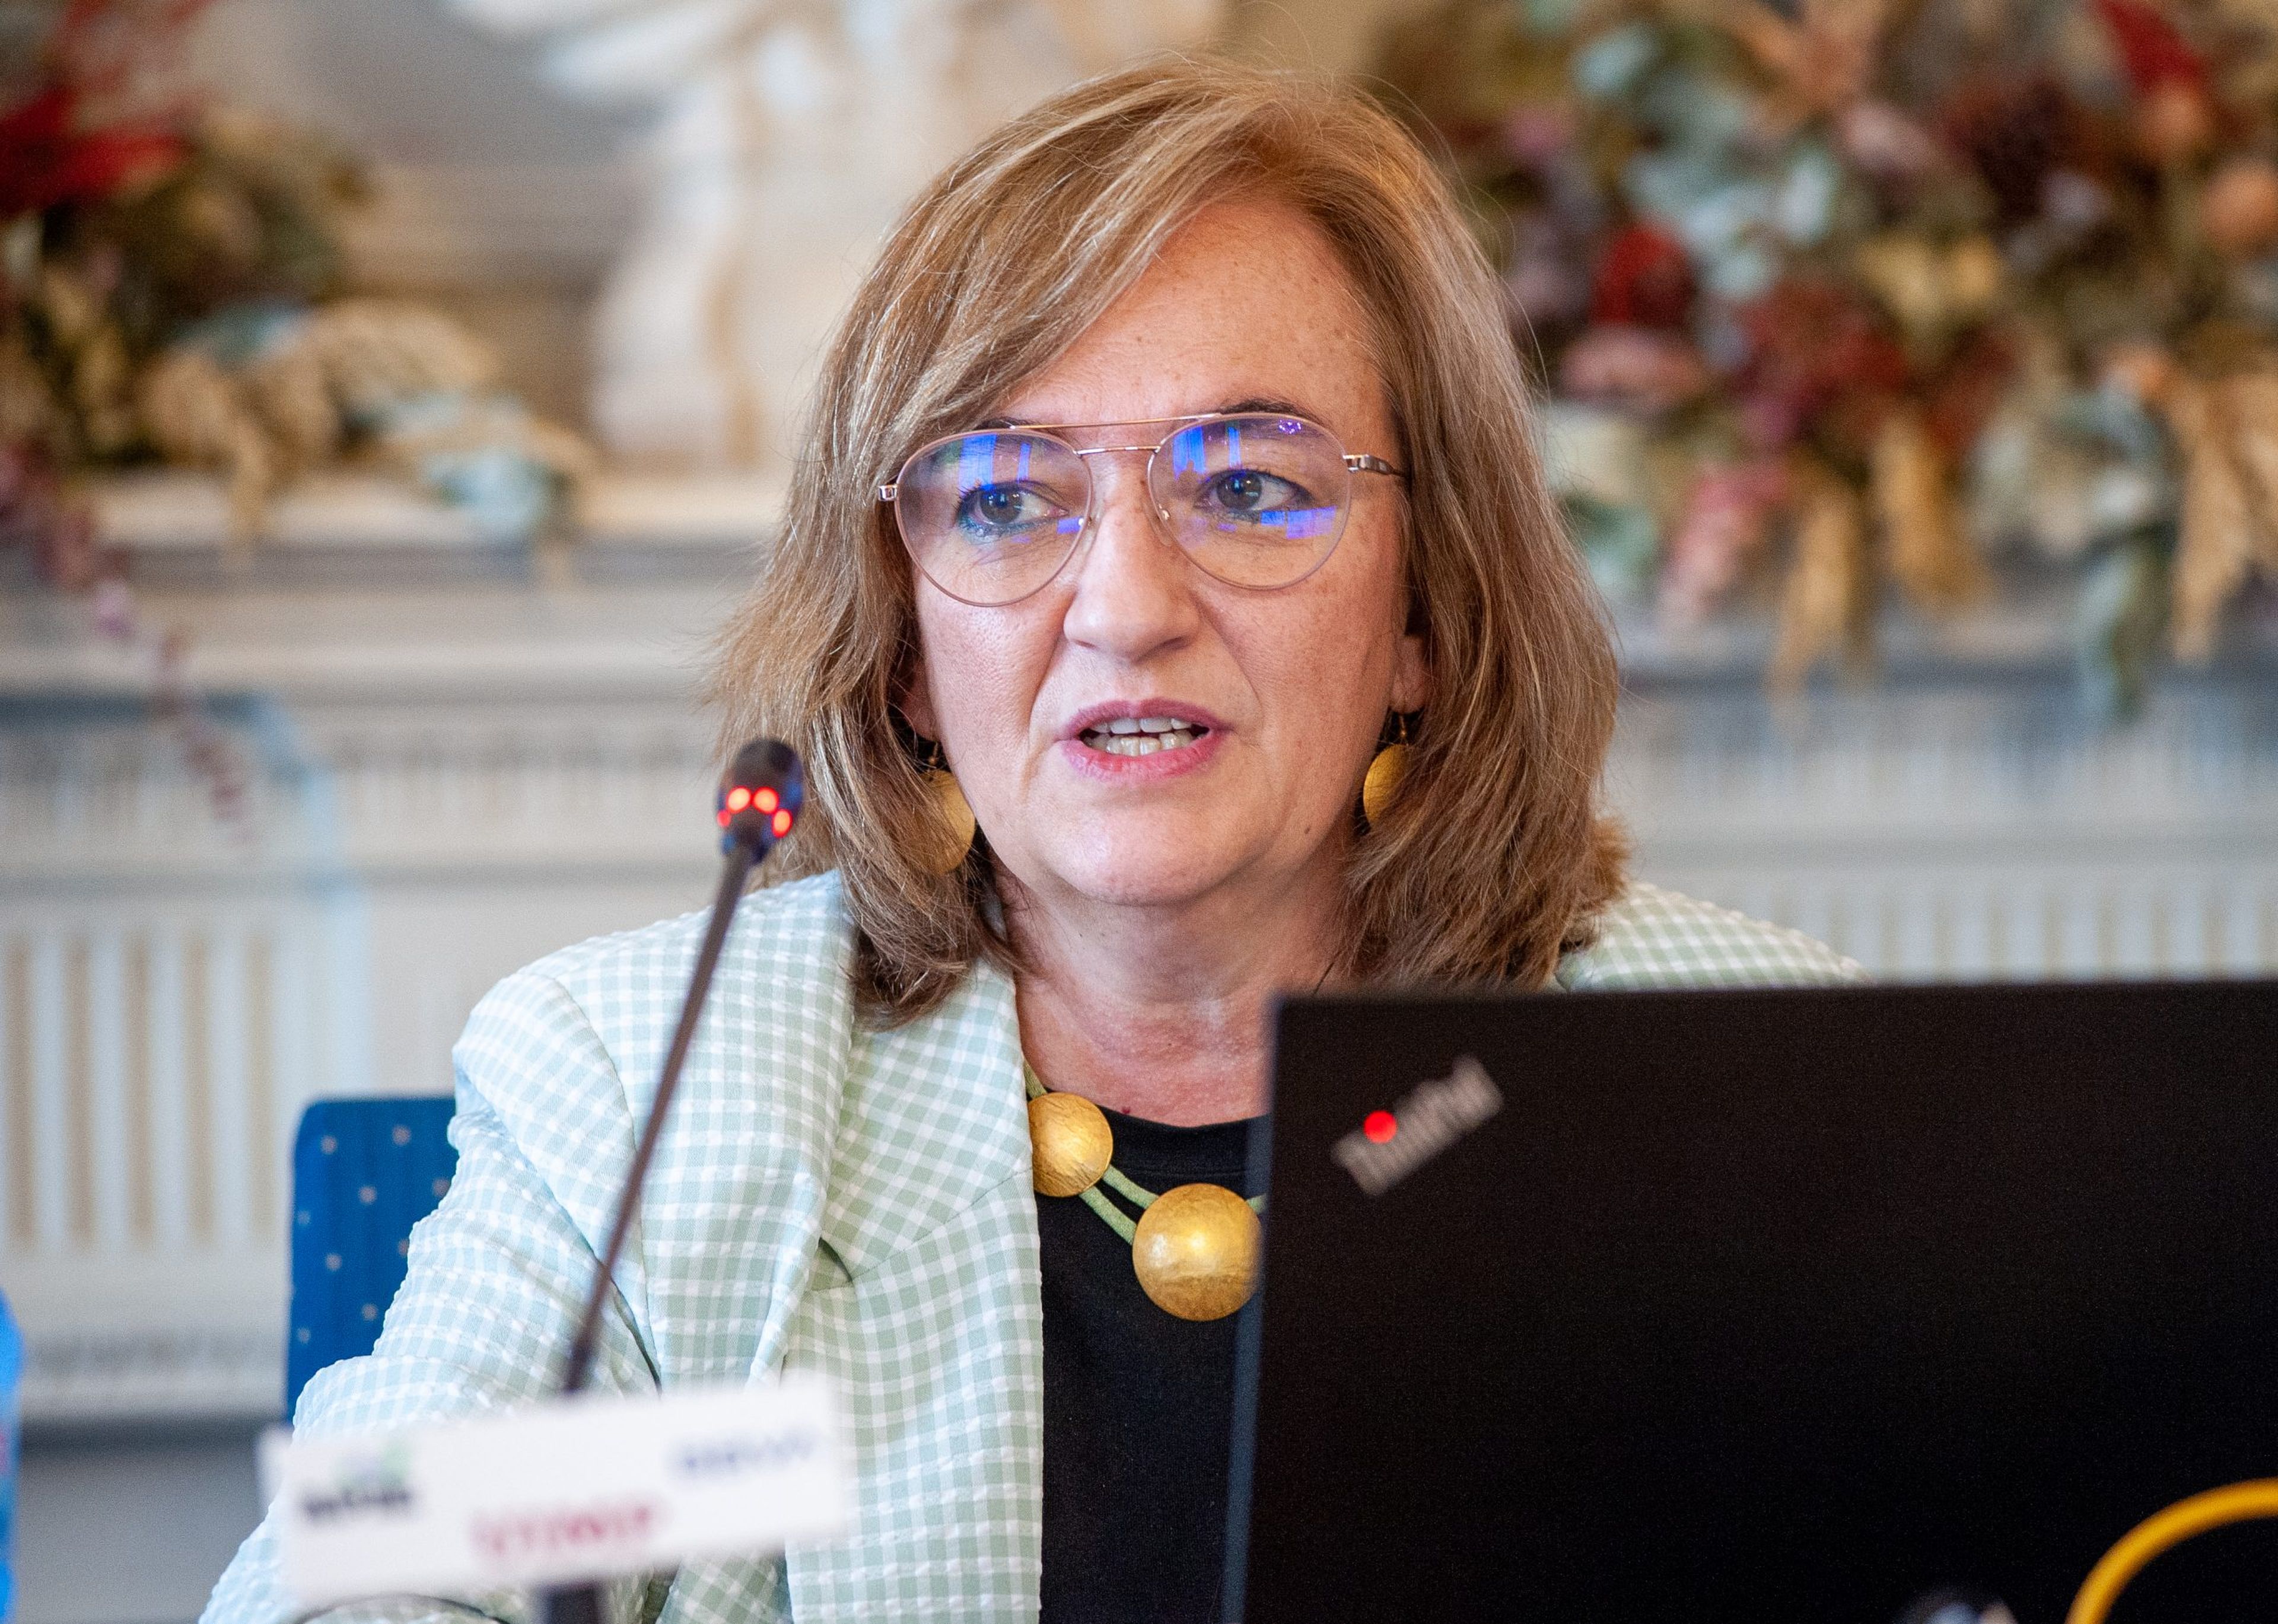 Cristina Herrero, presidenta de la Airef. 